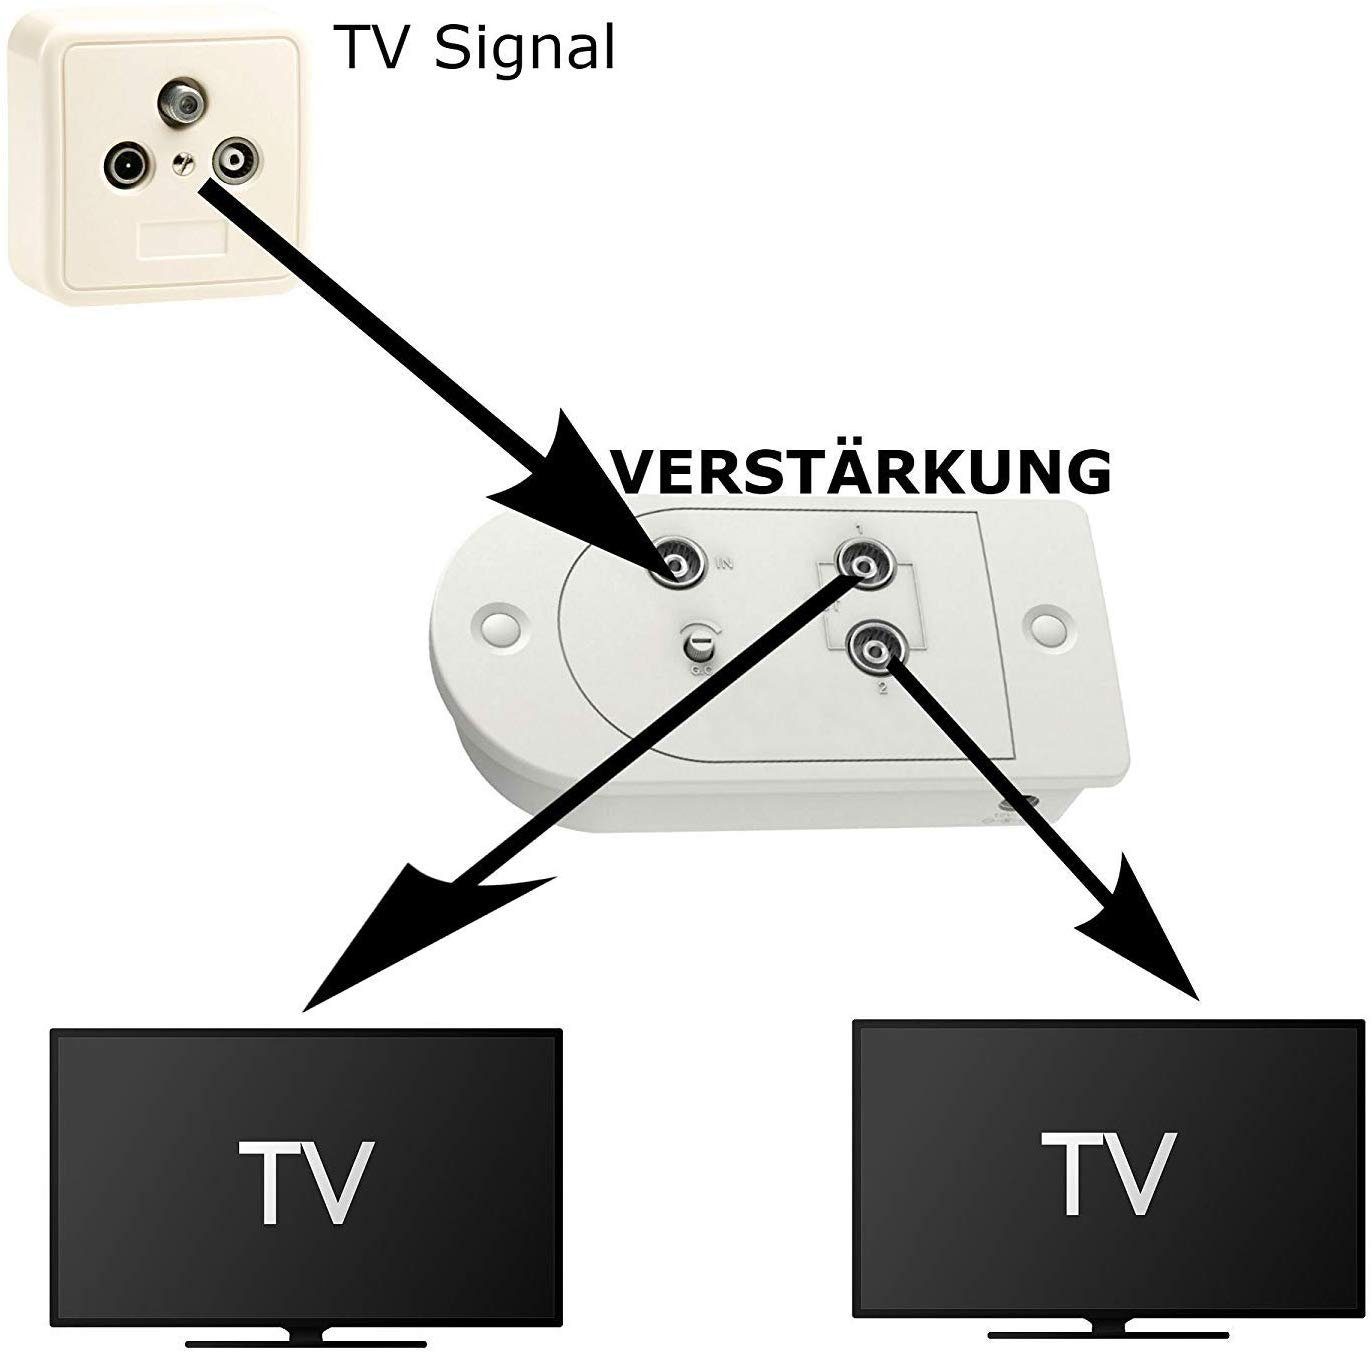 TronicXL Verstärker Kabelfernsehen Weiche Leistungsverstärker Splitter DVB-T DVB-C Verstärker